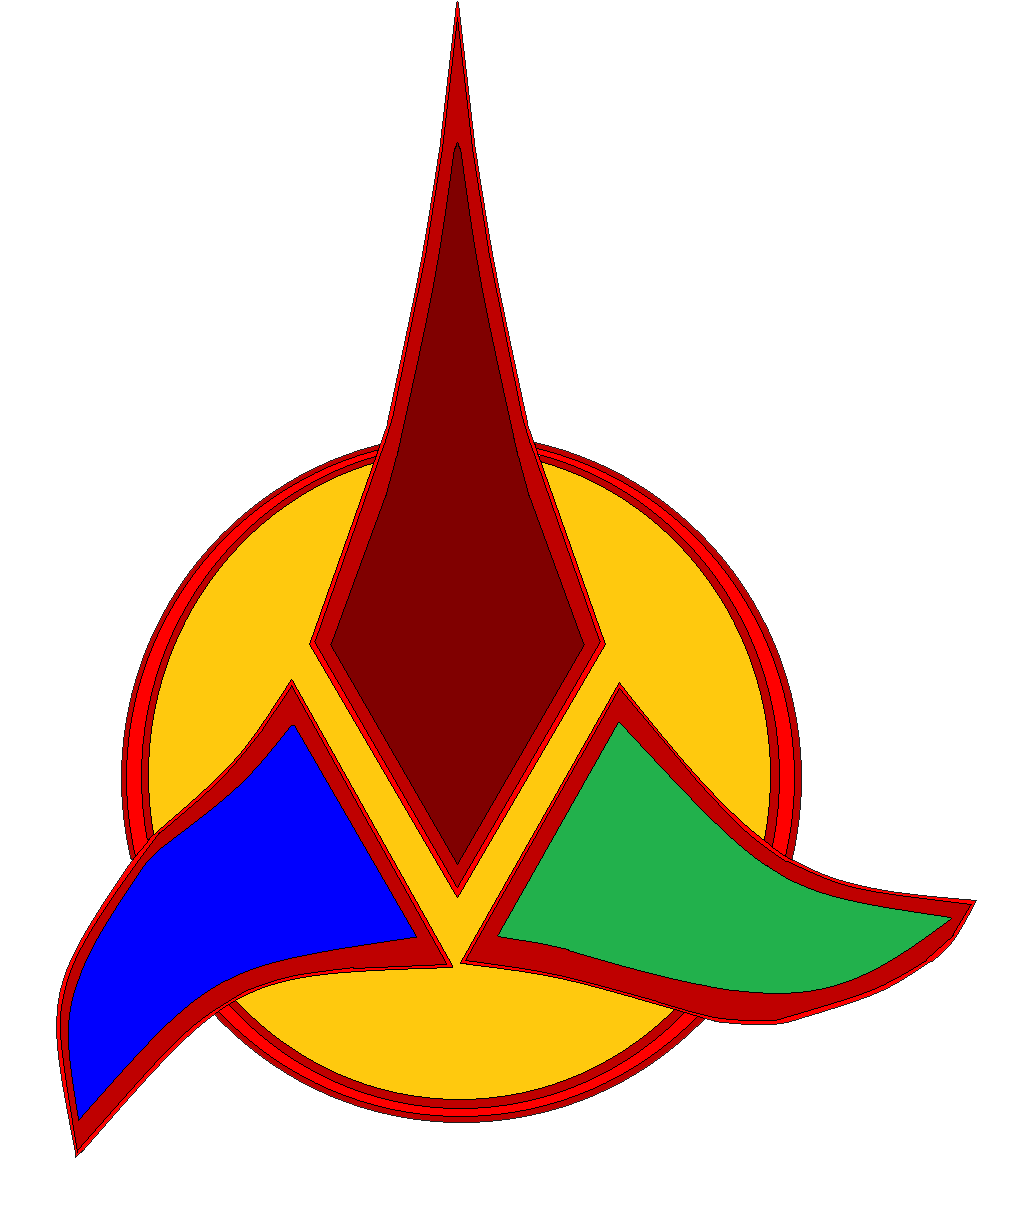 Emblem of the Klingon Empire classic